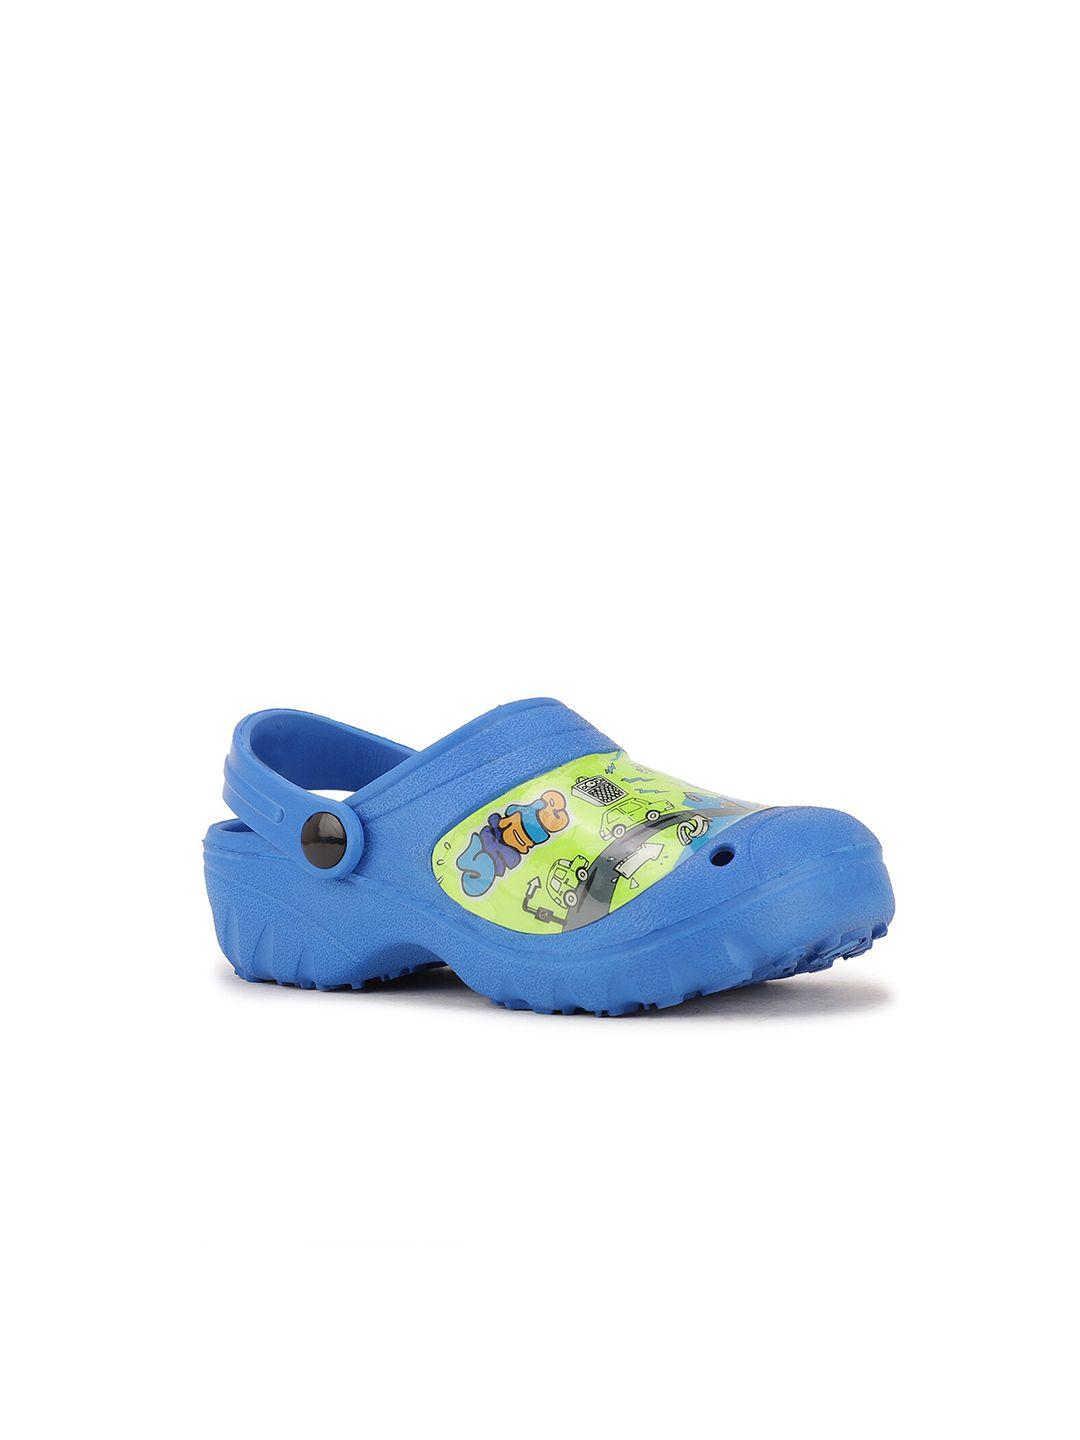 bubblegummers boys blue & lime green clogs sandals